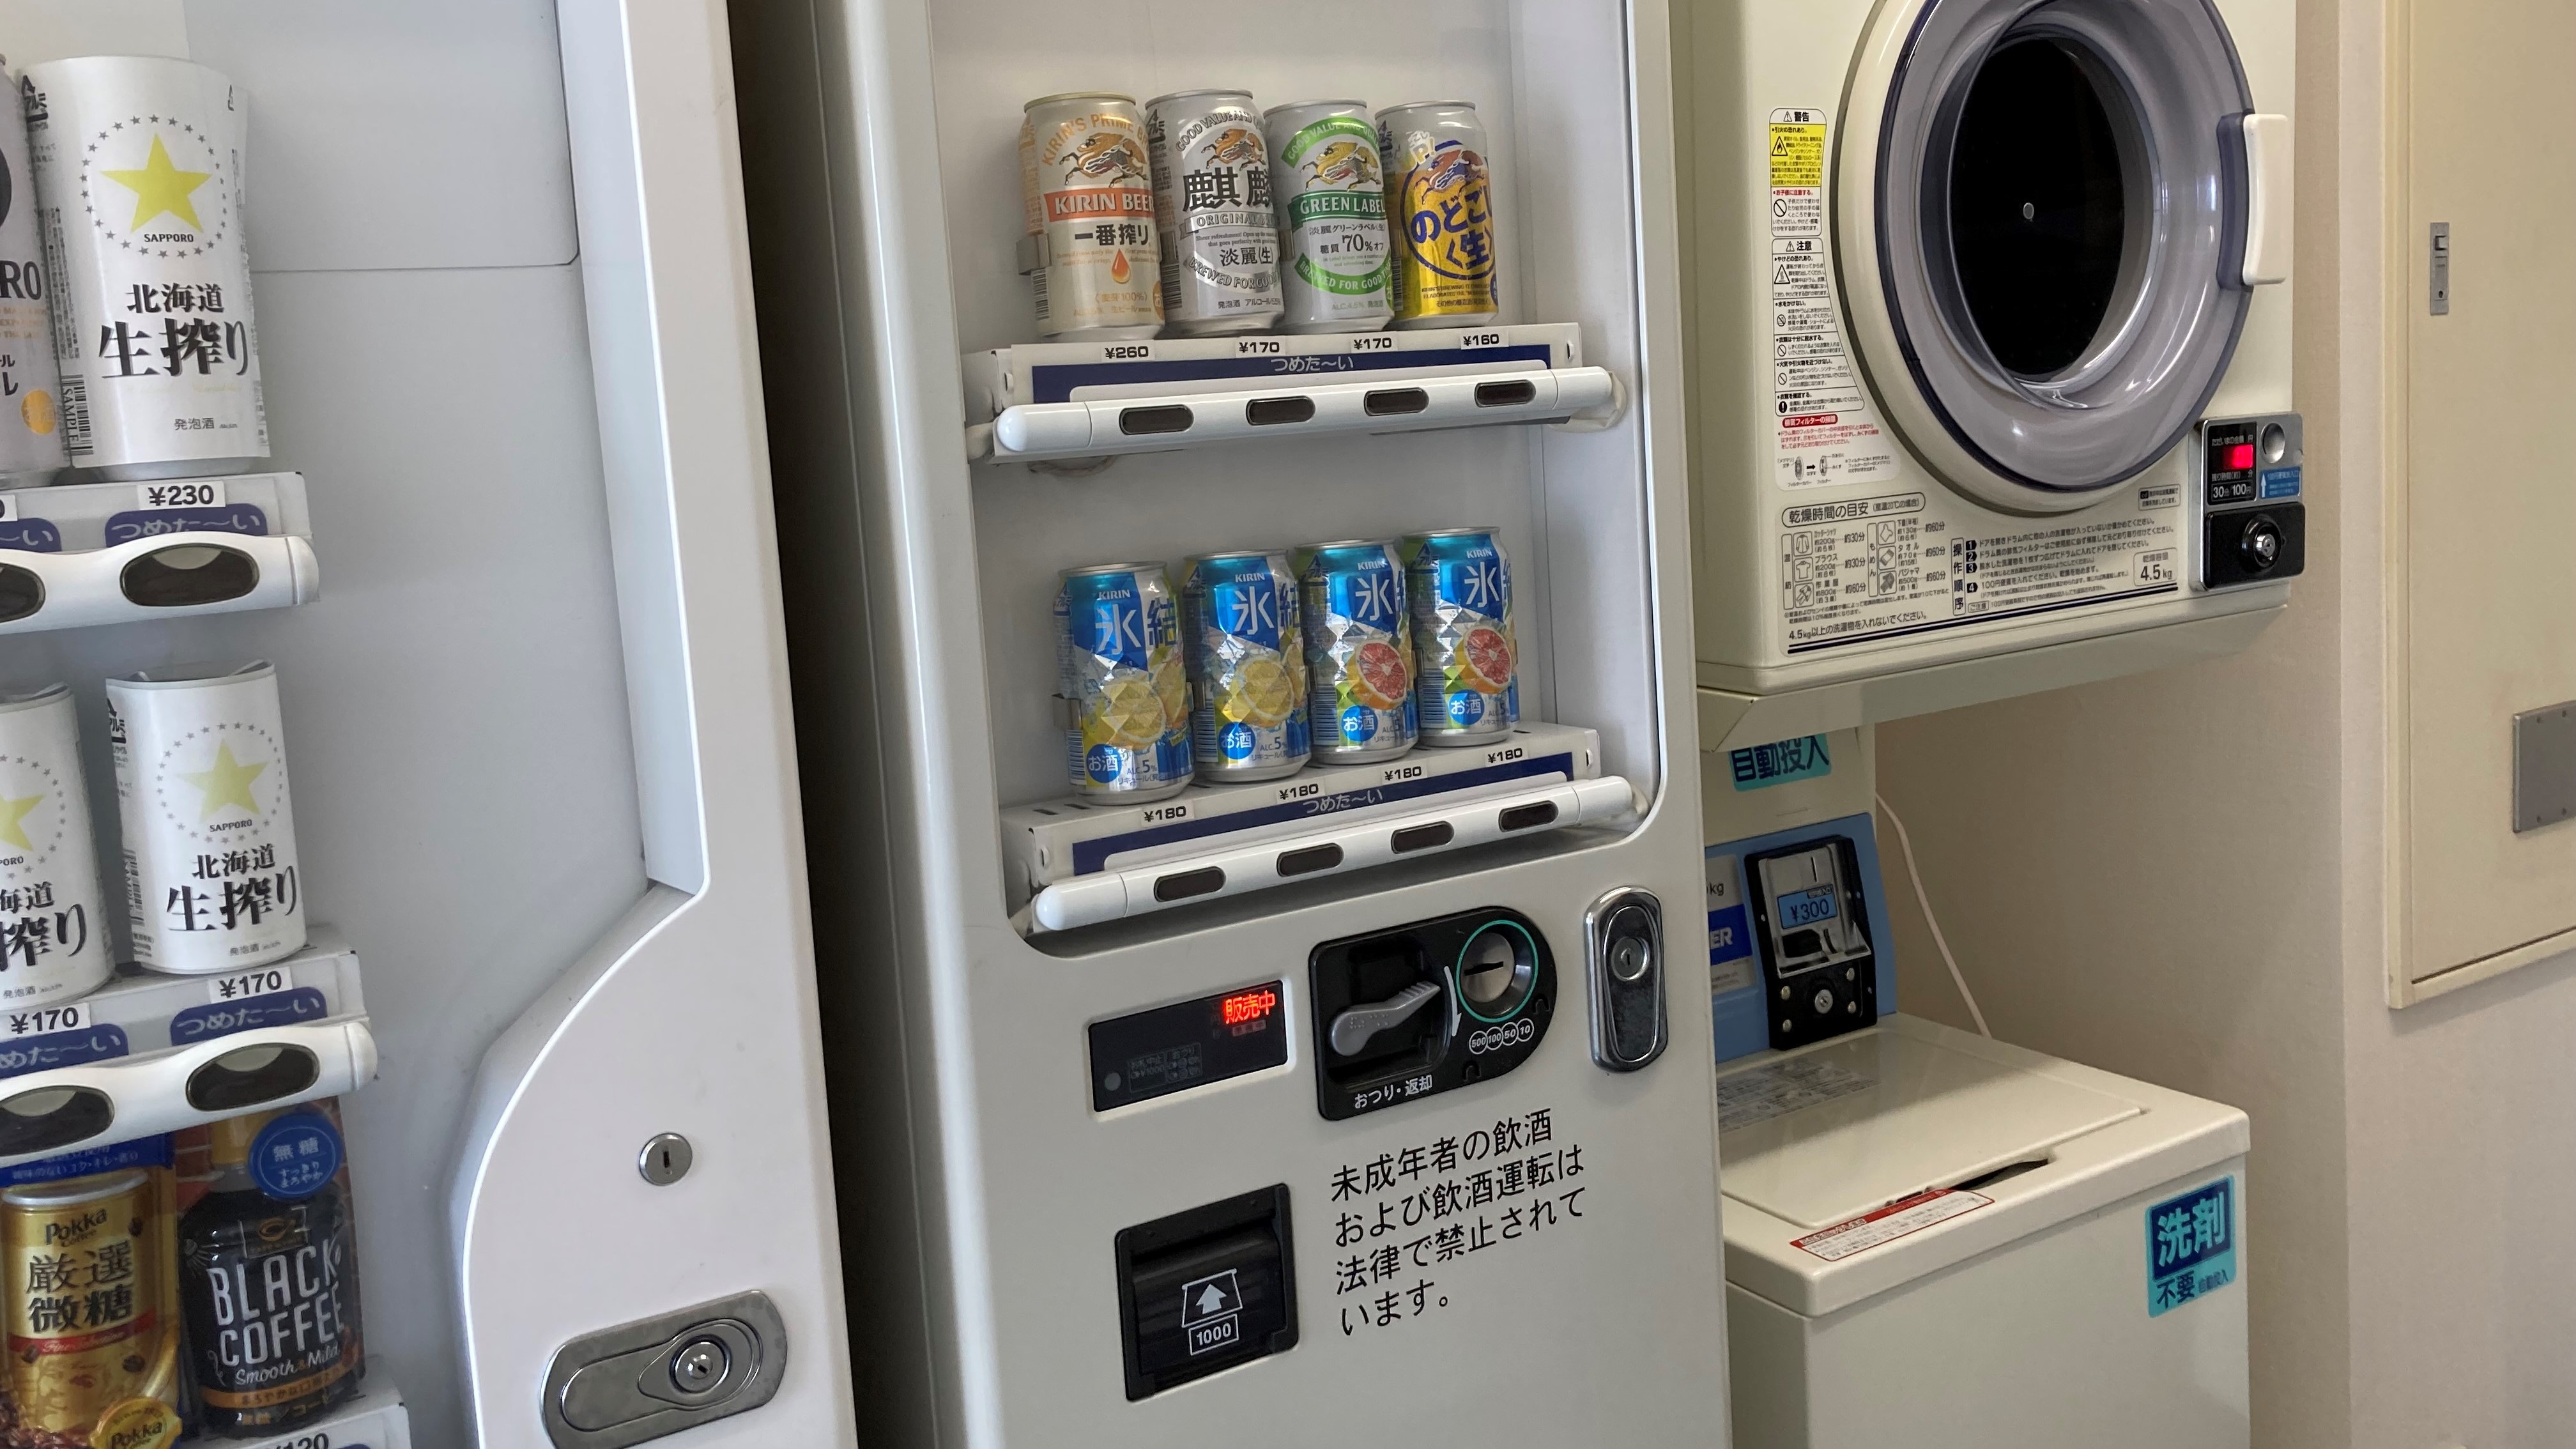 Vending machine and laundromat